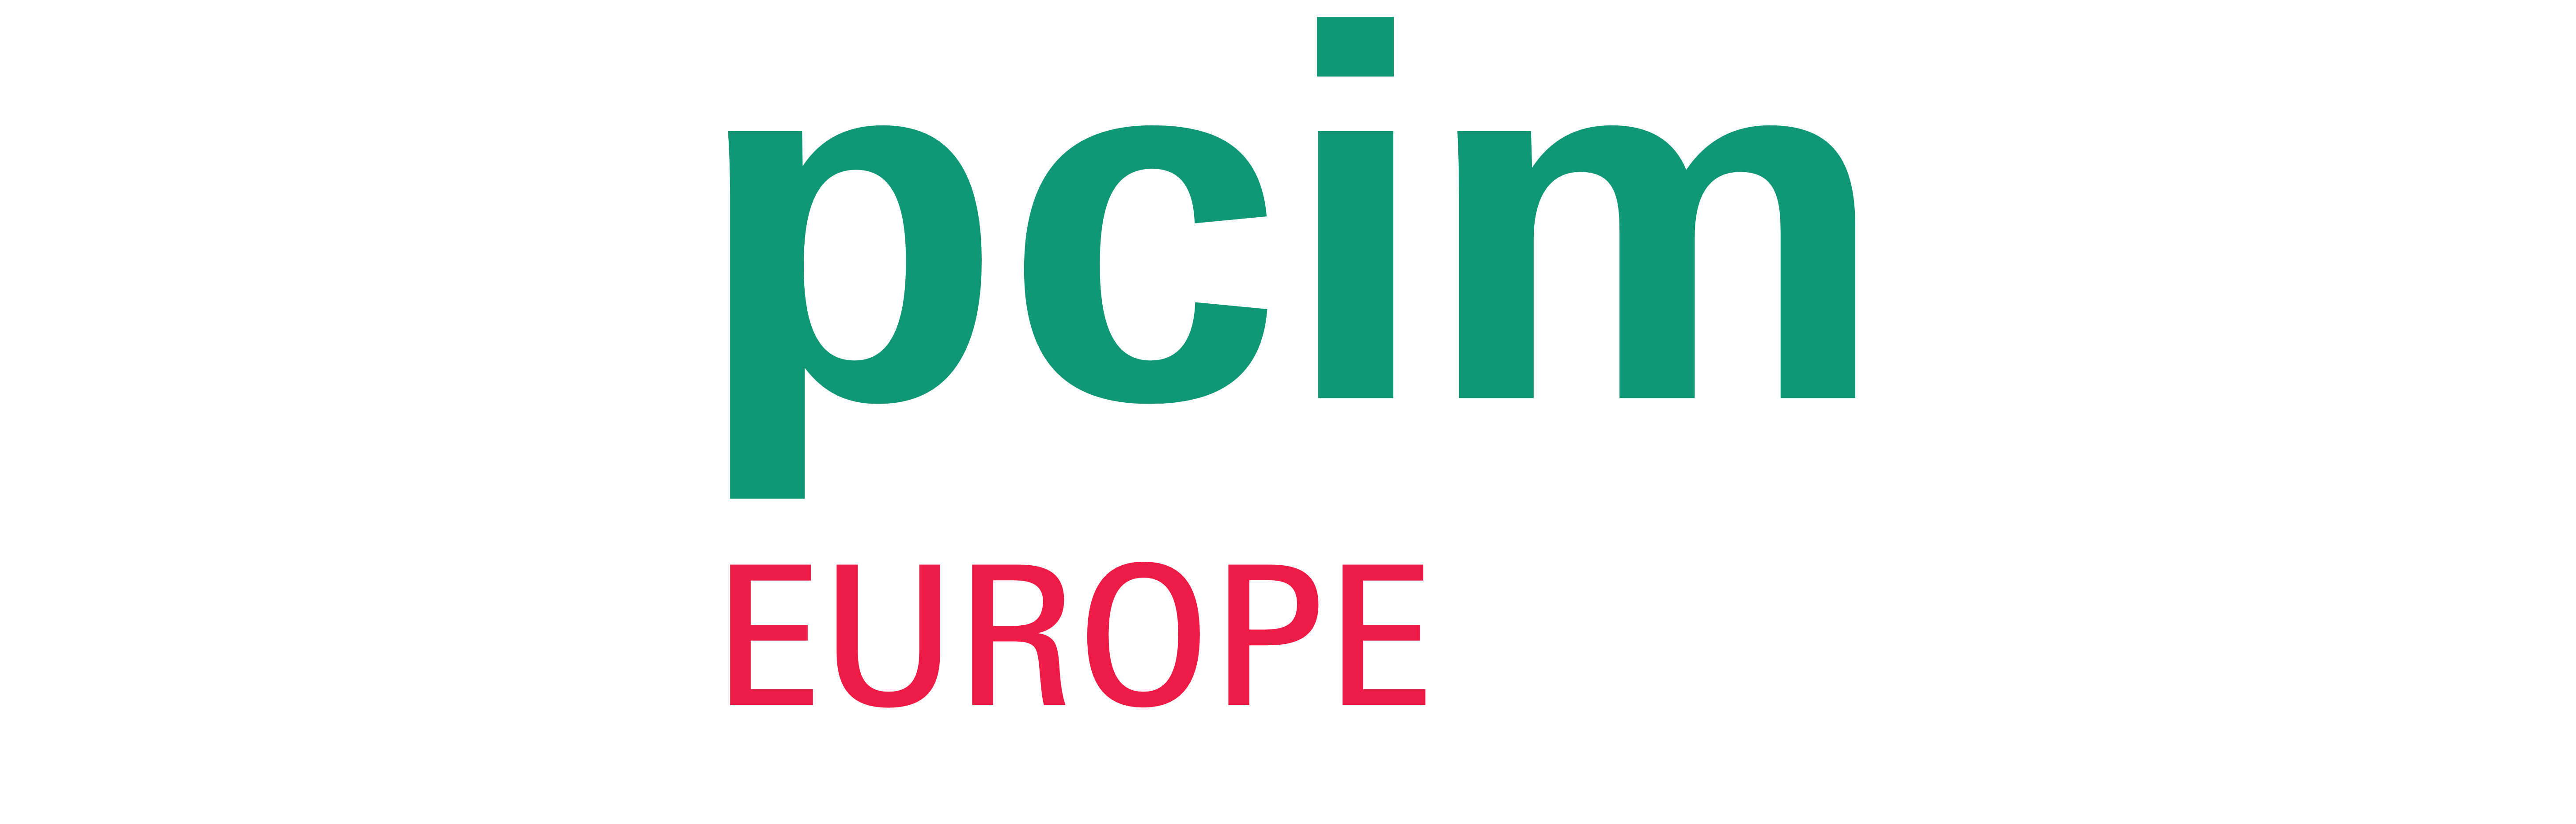 image banner teaser PCIM Europe